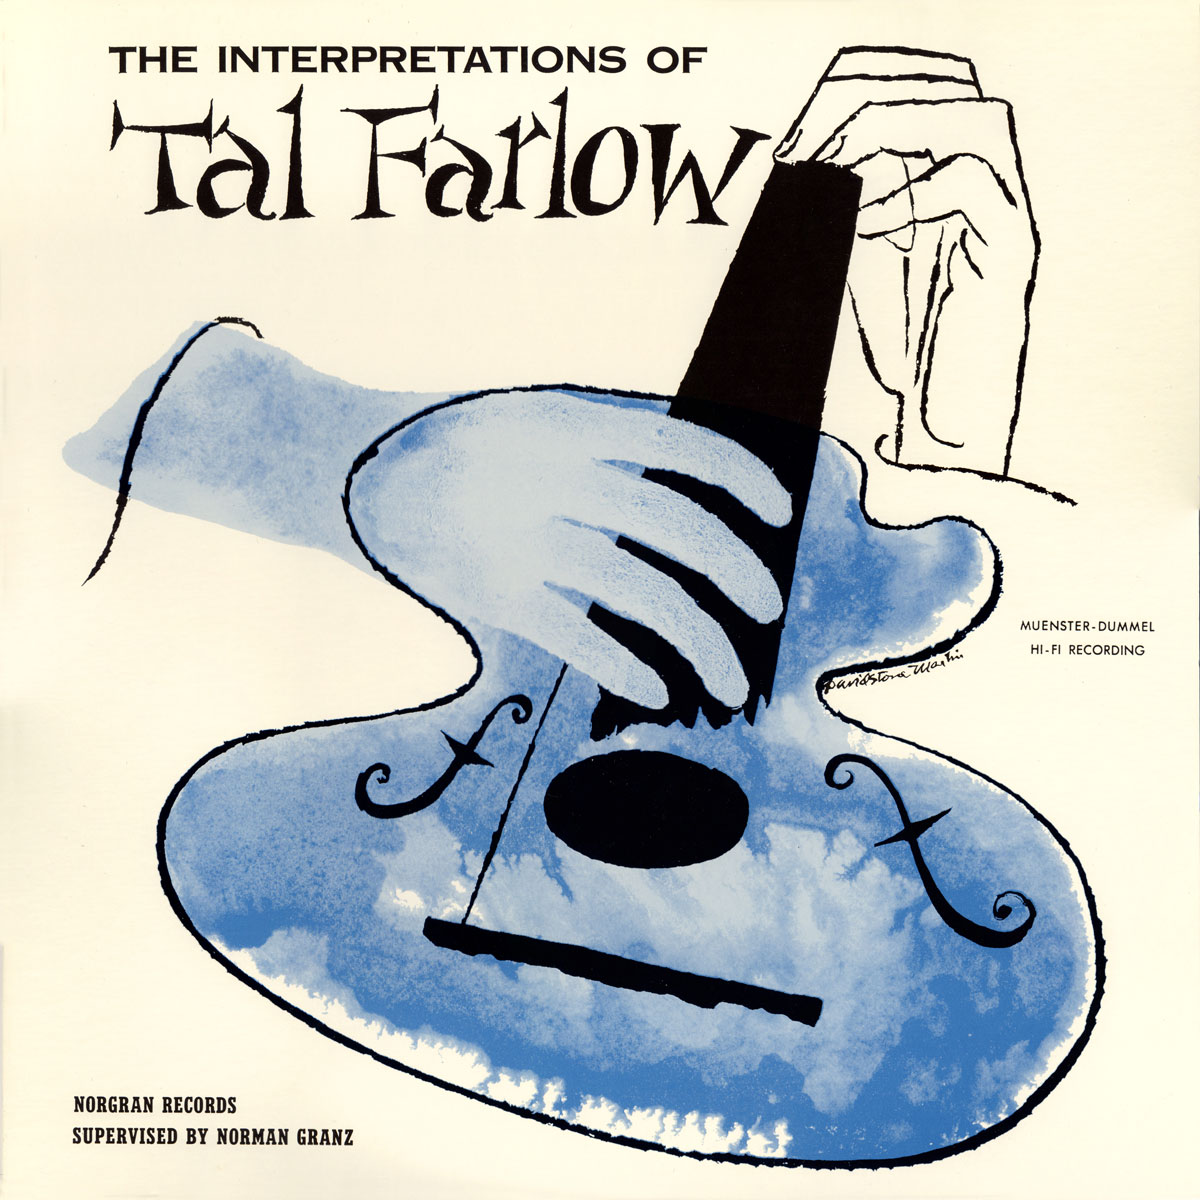 Tal Farlow - The Interpretations of Tal Farlow - Front cover